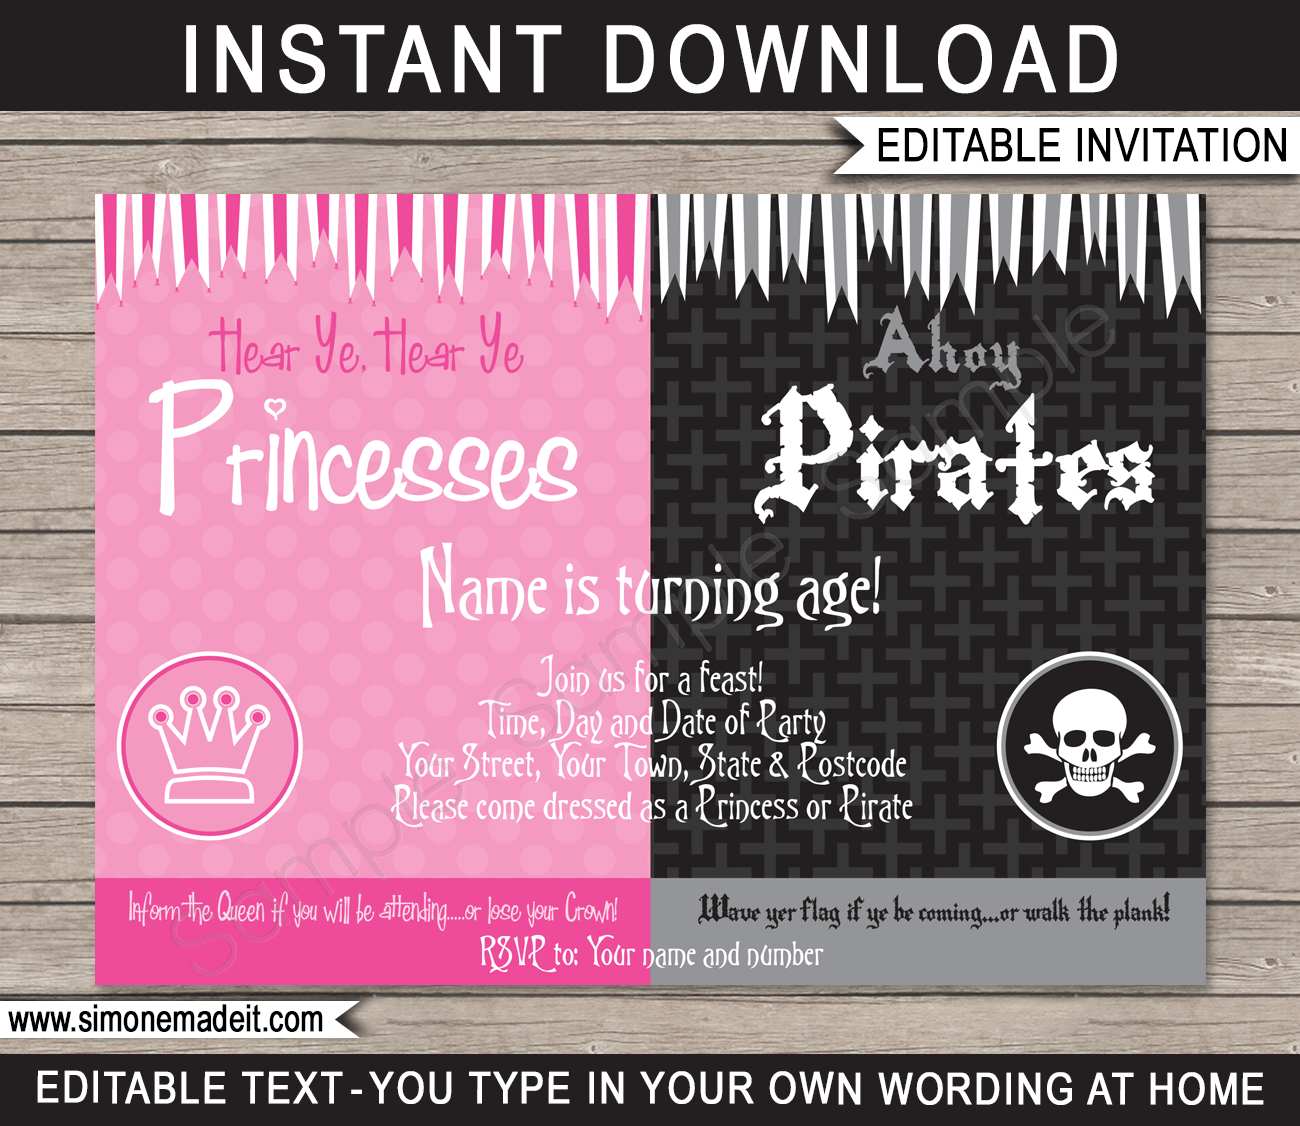 Pirates & Princesses Party Invitations | Birthday Party | Editable DIY Theme Template | INSTANT DOWNLOAD $7.50 via SIMONEmadeit.com